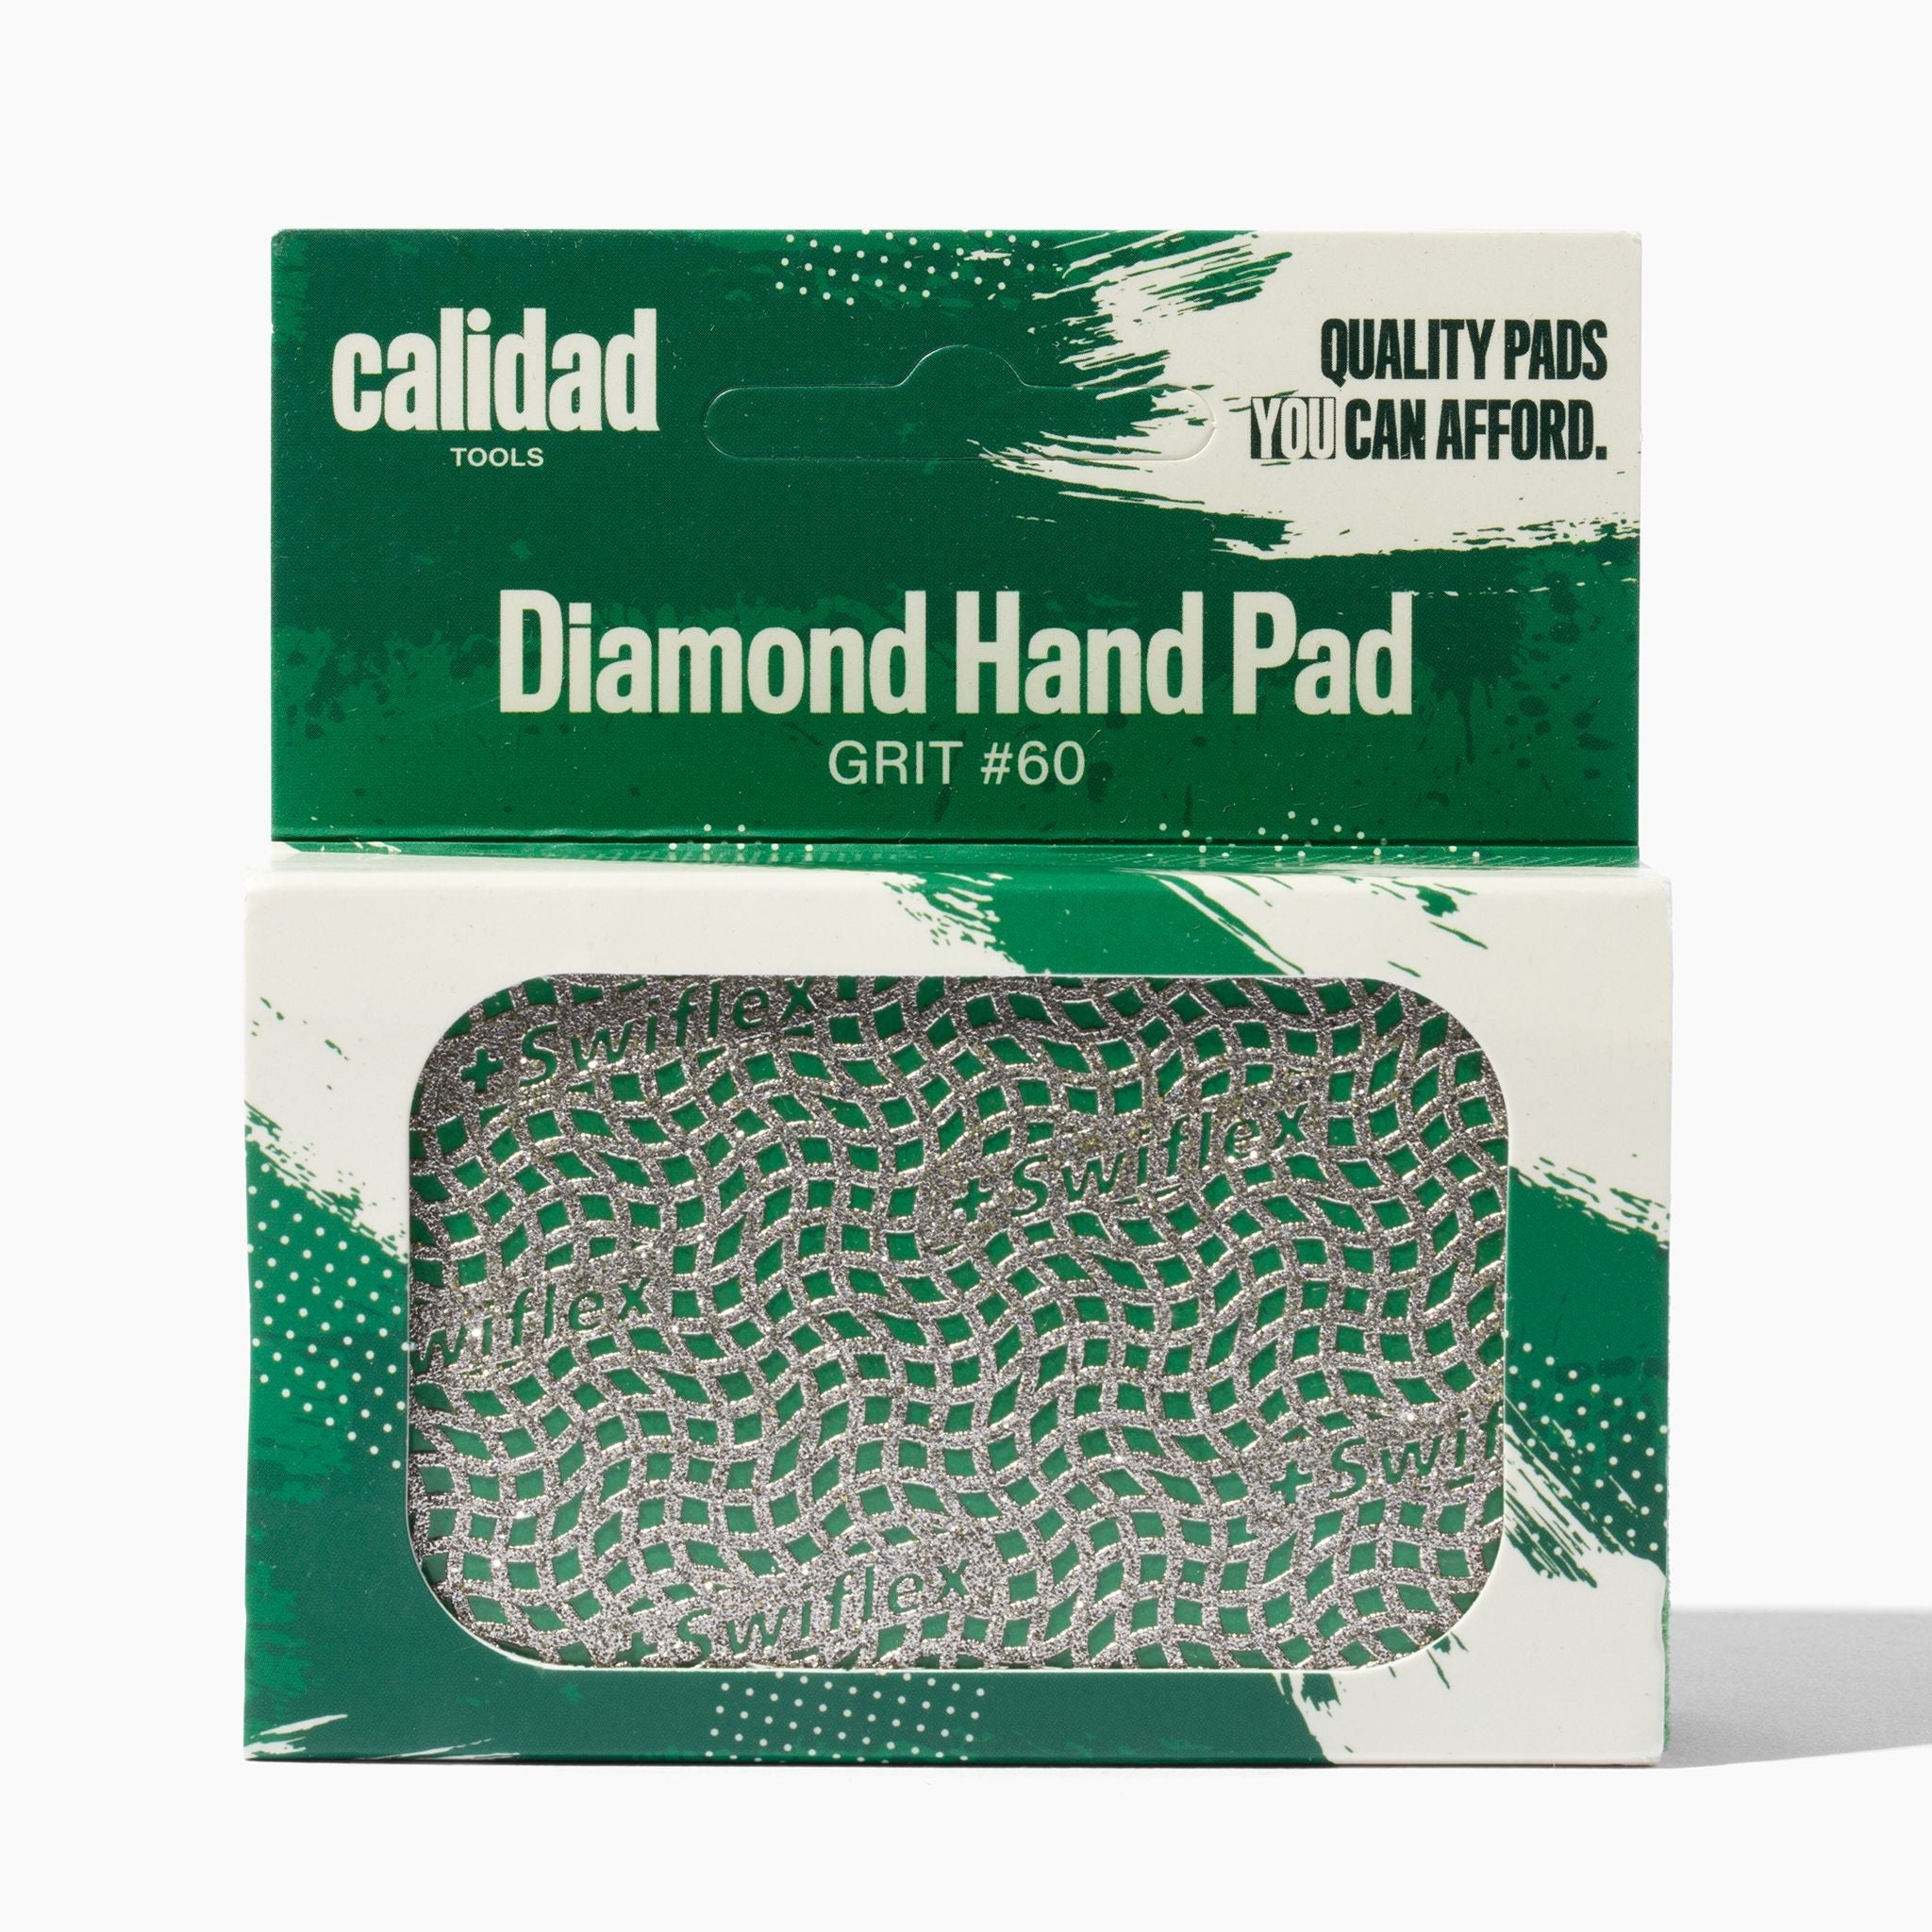 Calidad Diamond Hand Pad Grit #60